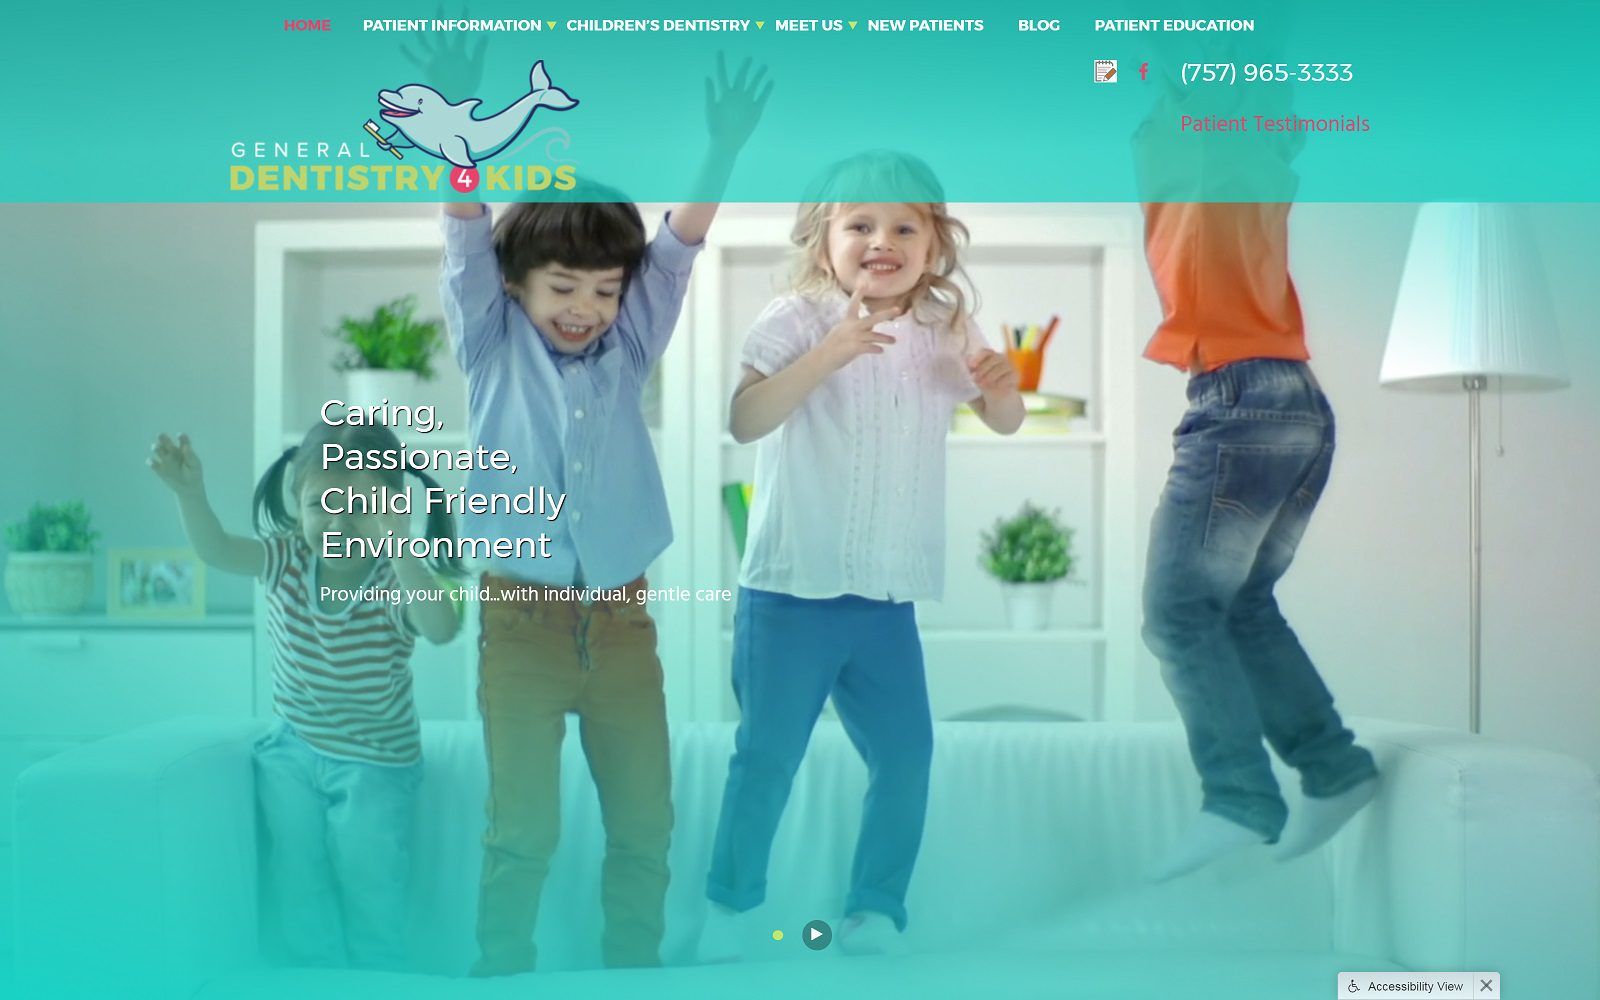 The screenshot of general dentistry 4 kids website